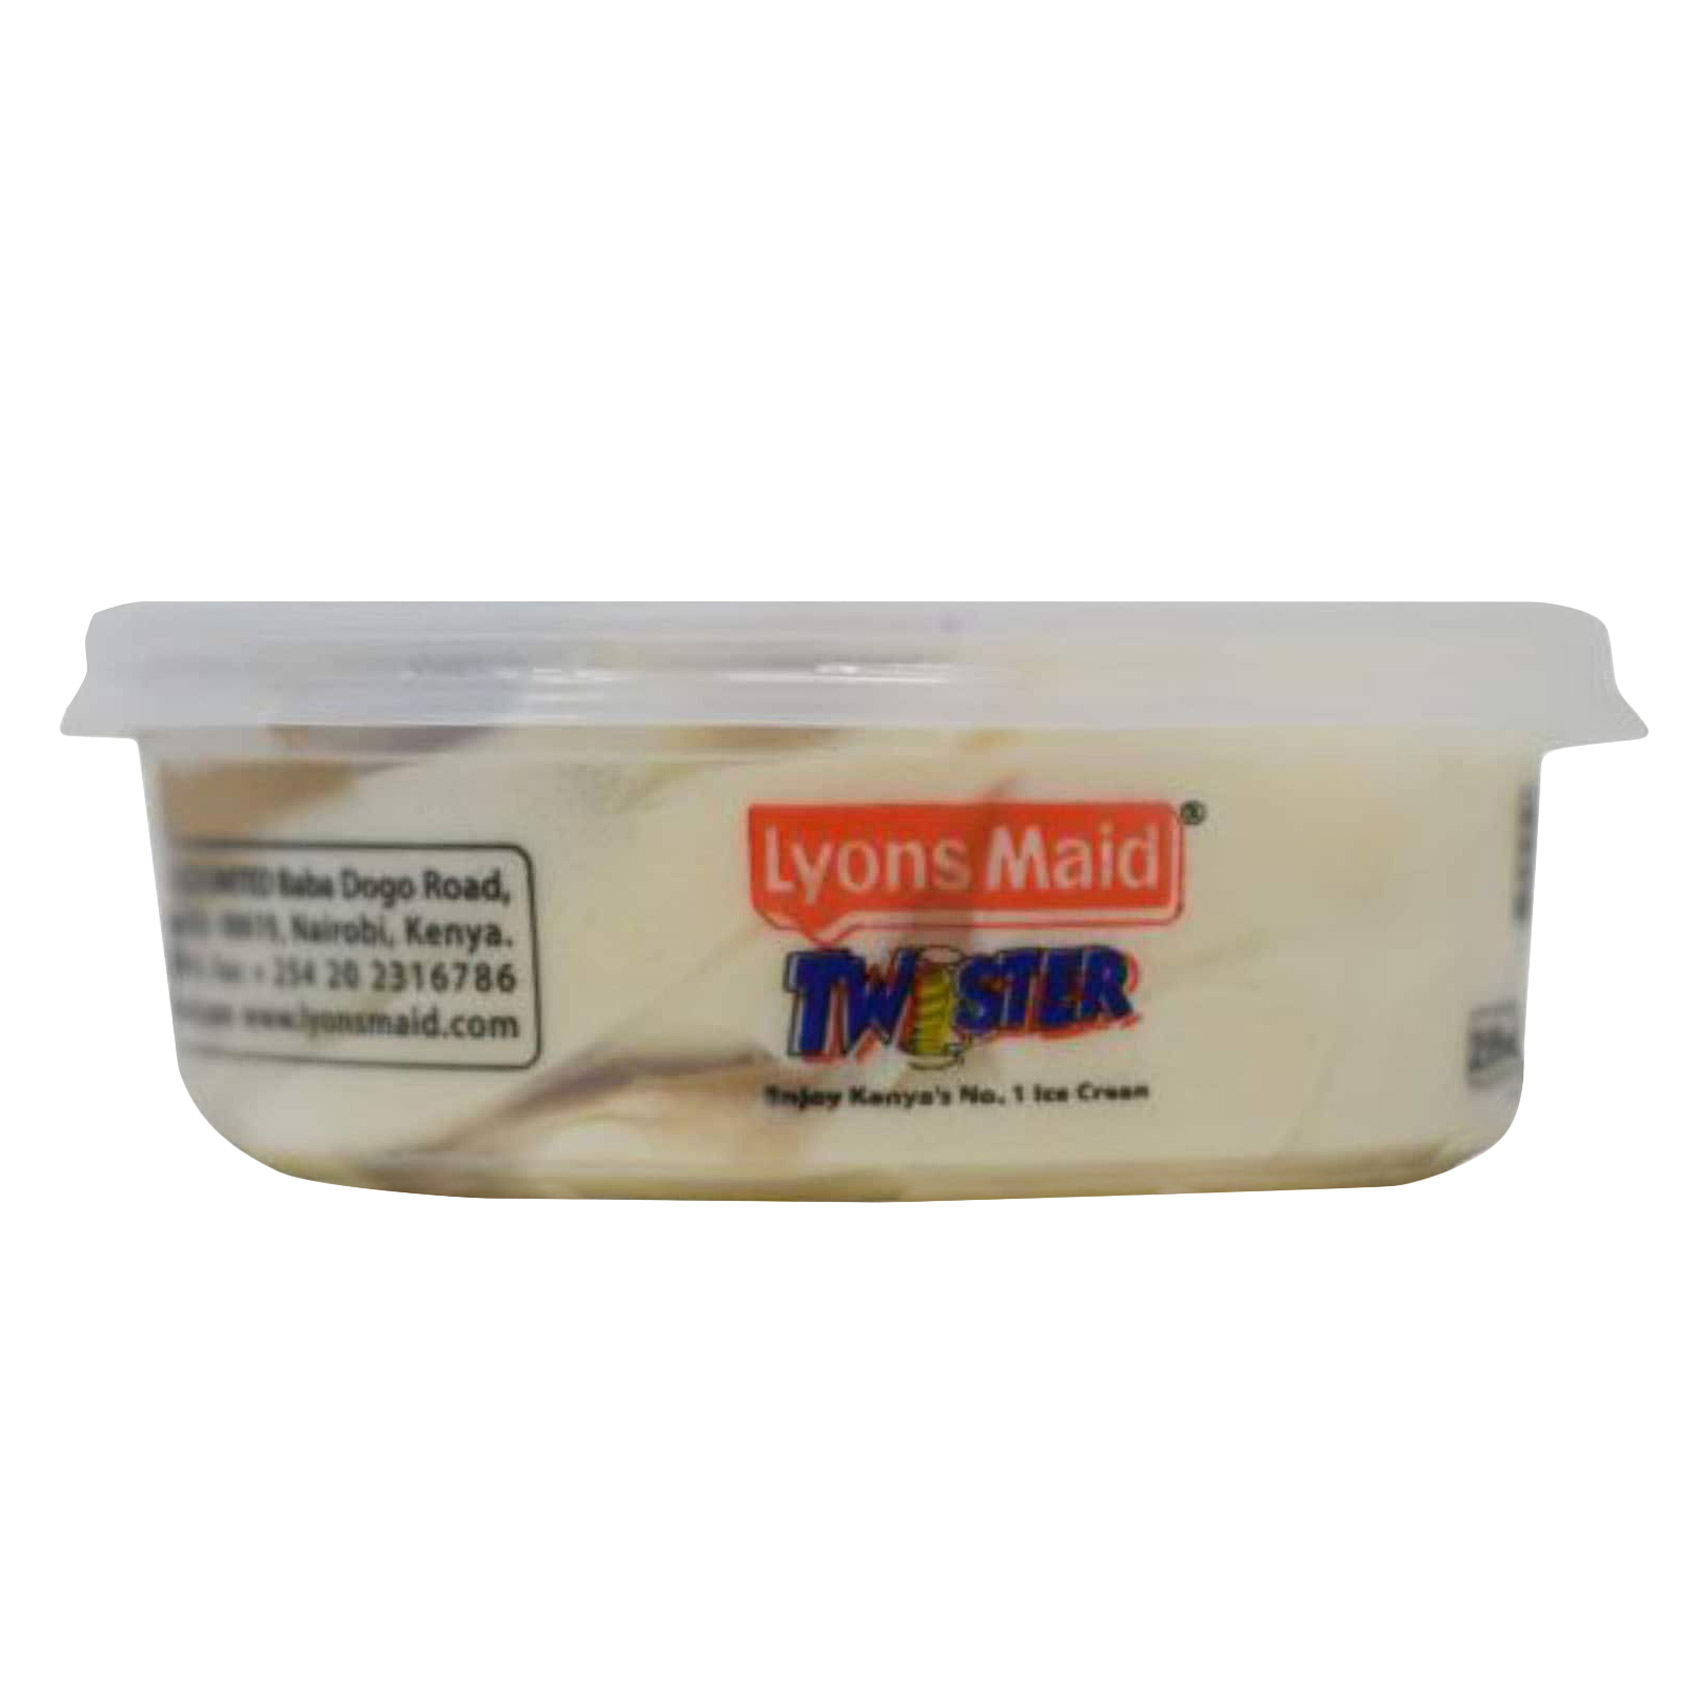 Lyons Maid Twister Vanilla And Chocolate Ice Cream 250ml